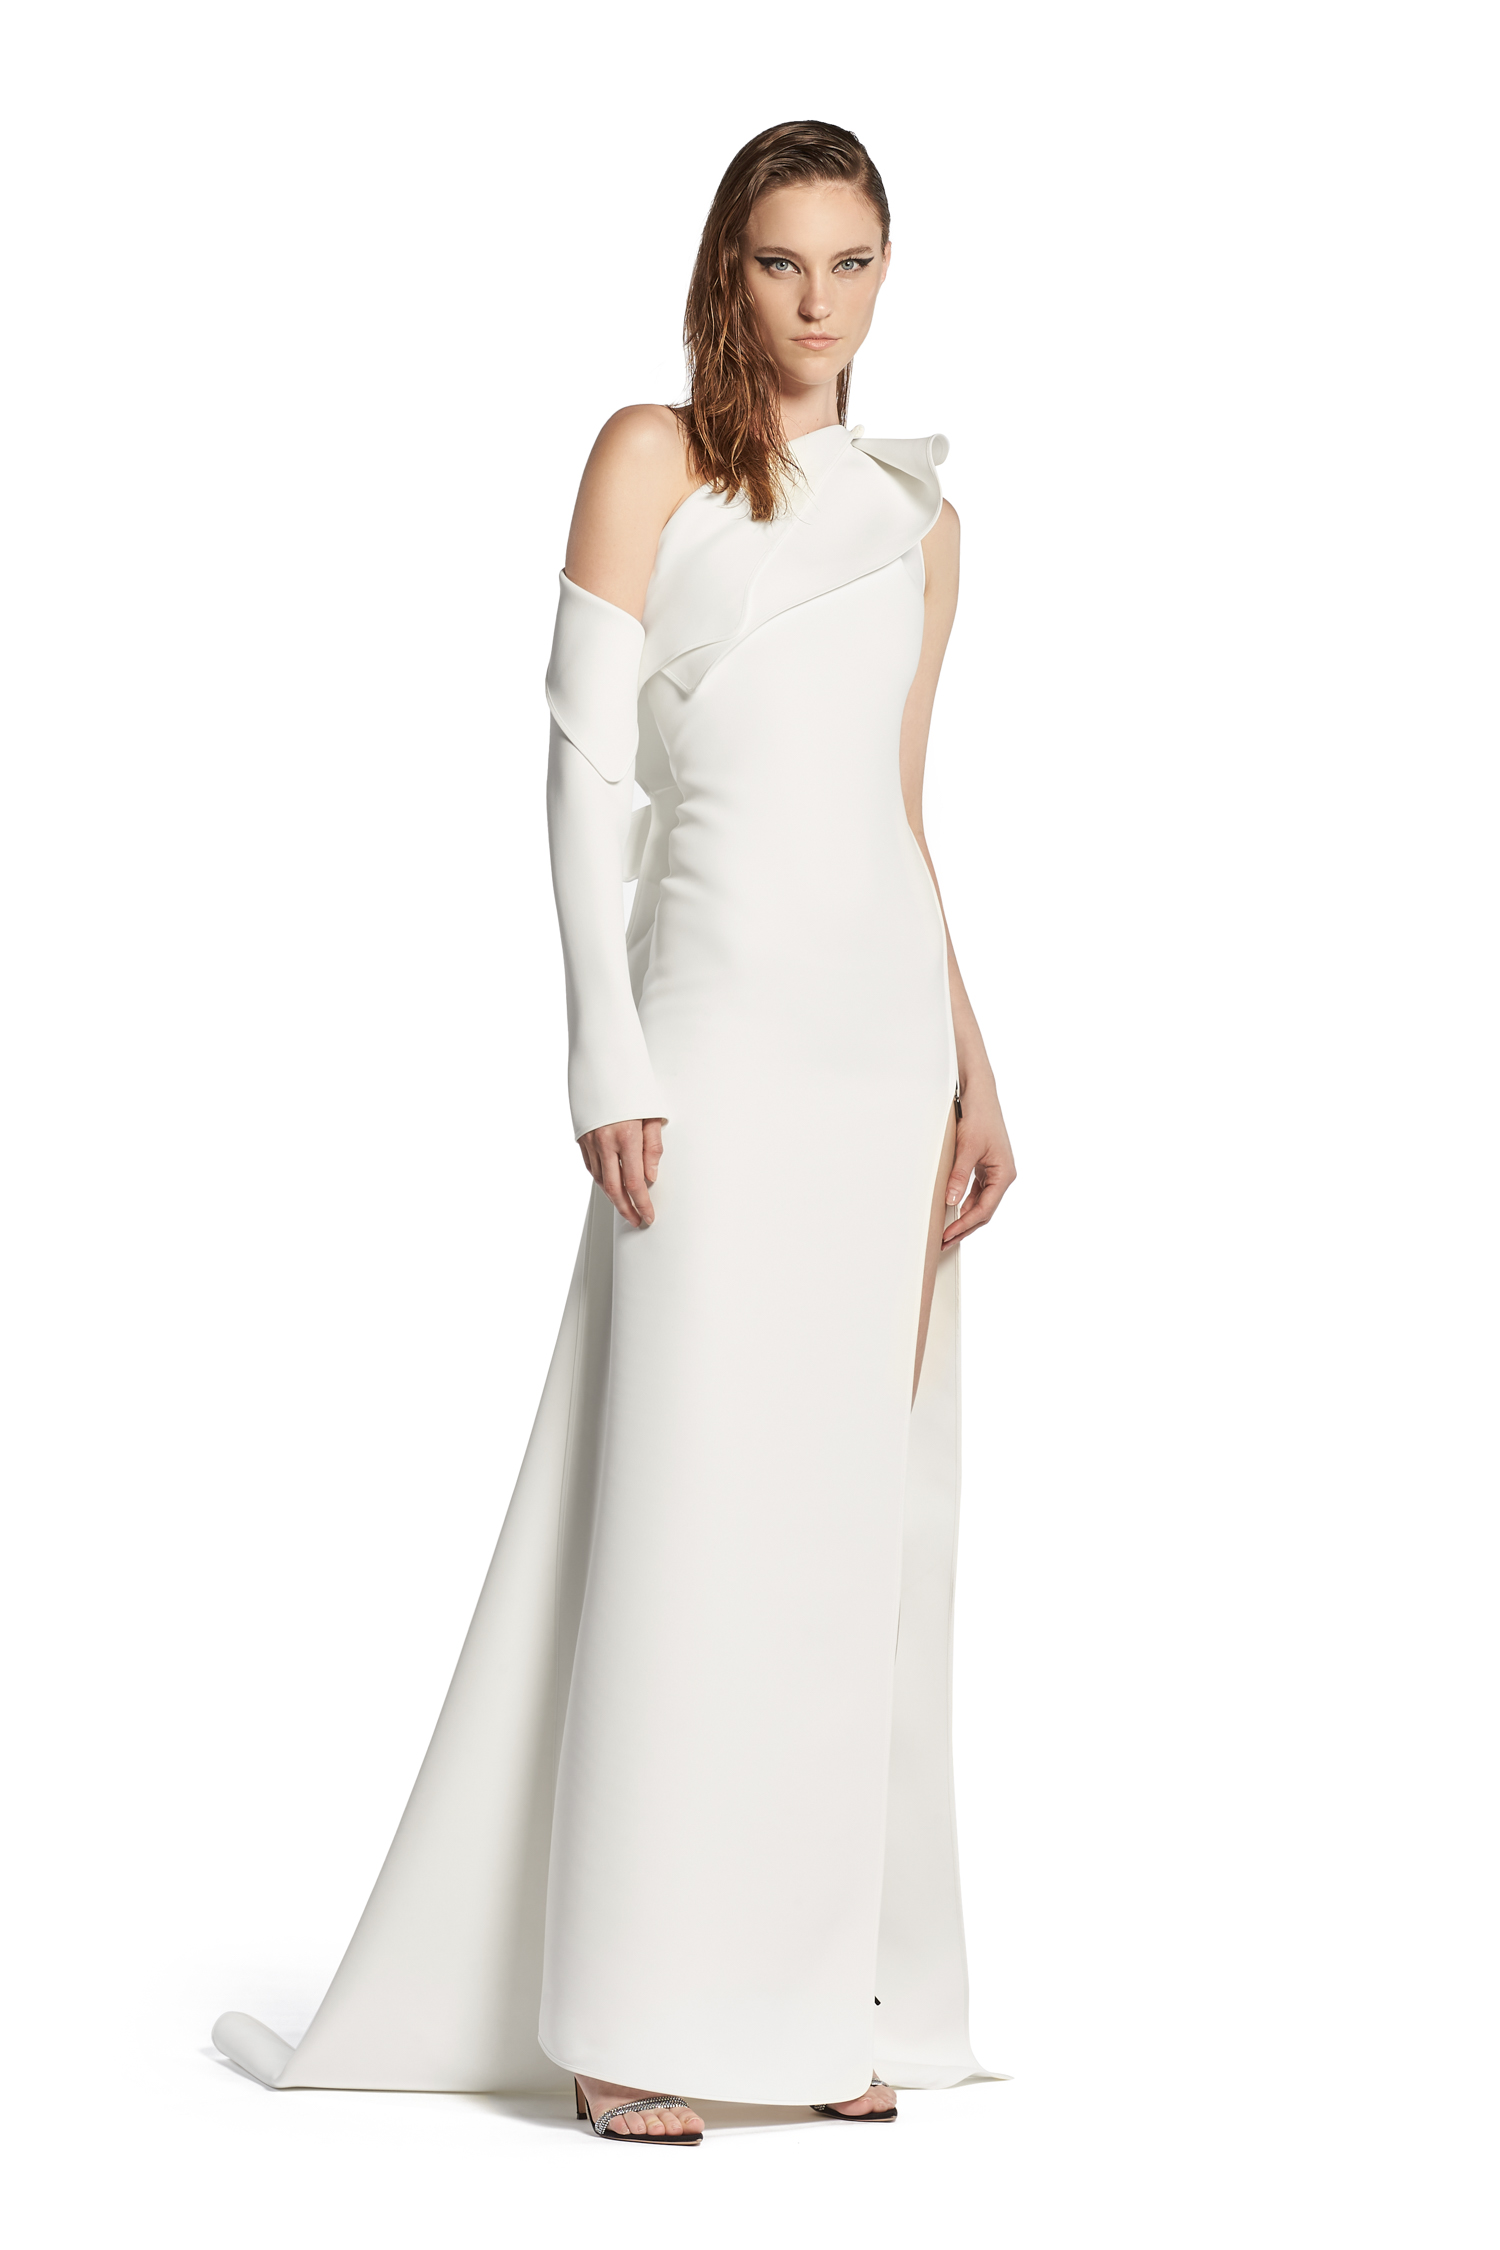 Archer Wedding Gown by Toni Maticevski | Bluebell Bridal | Wedding ...